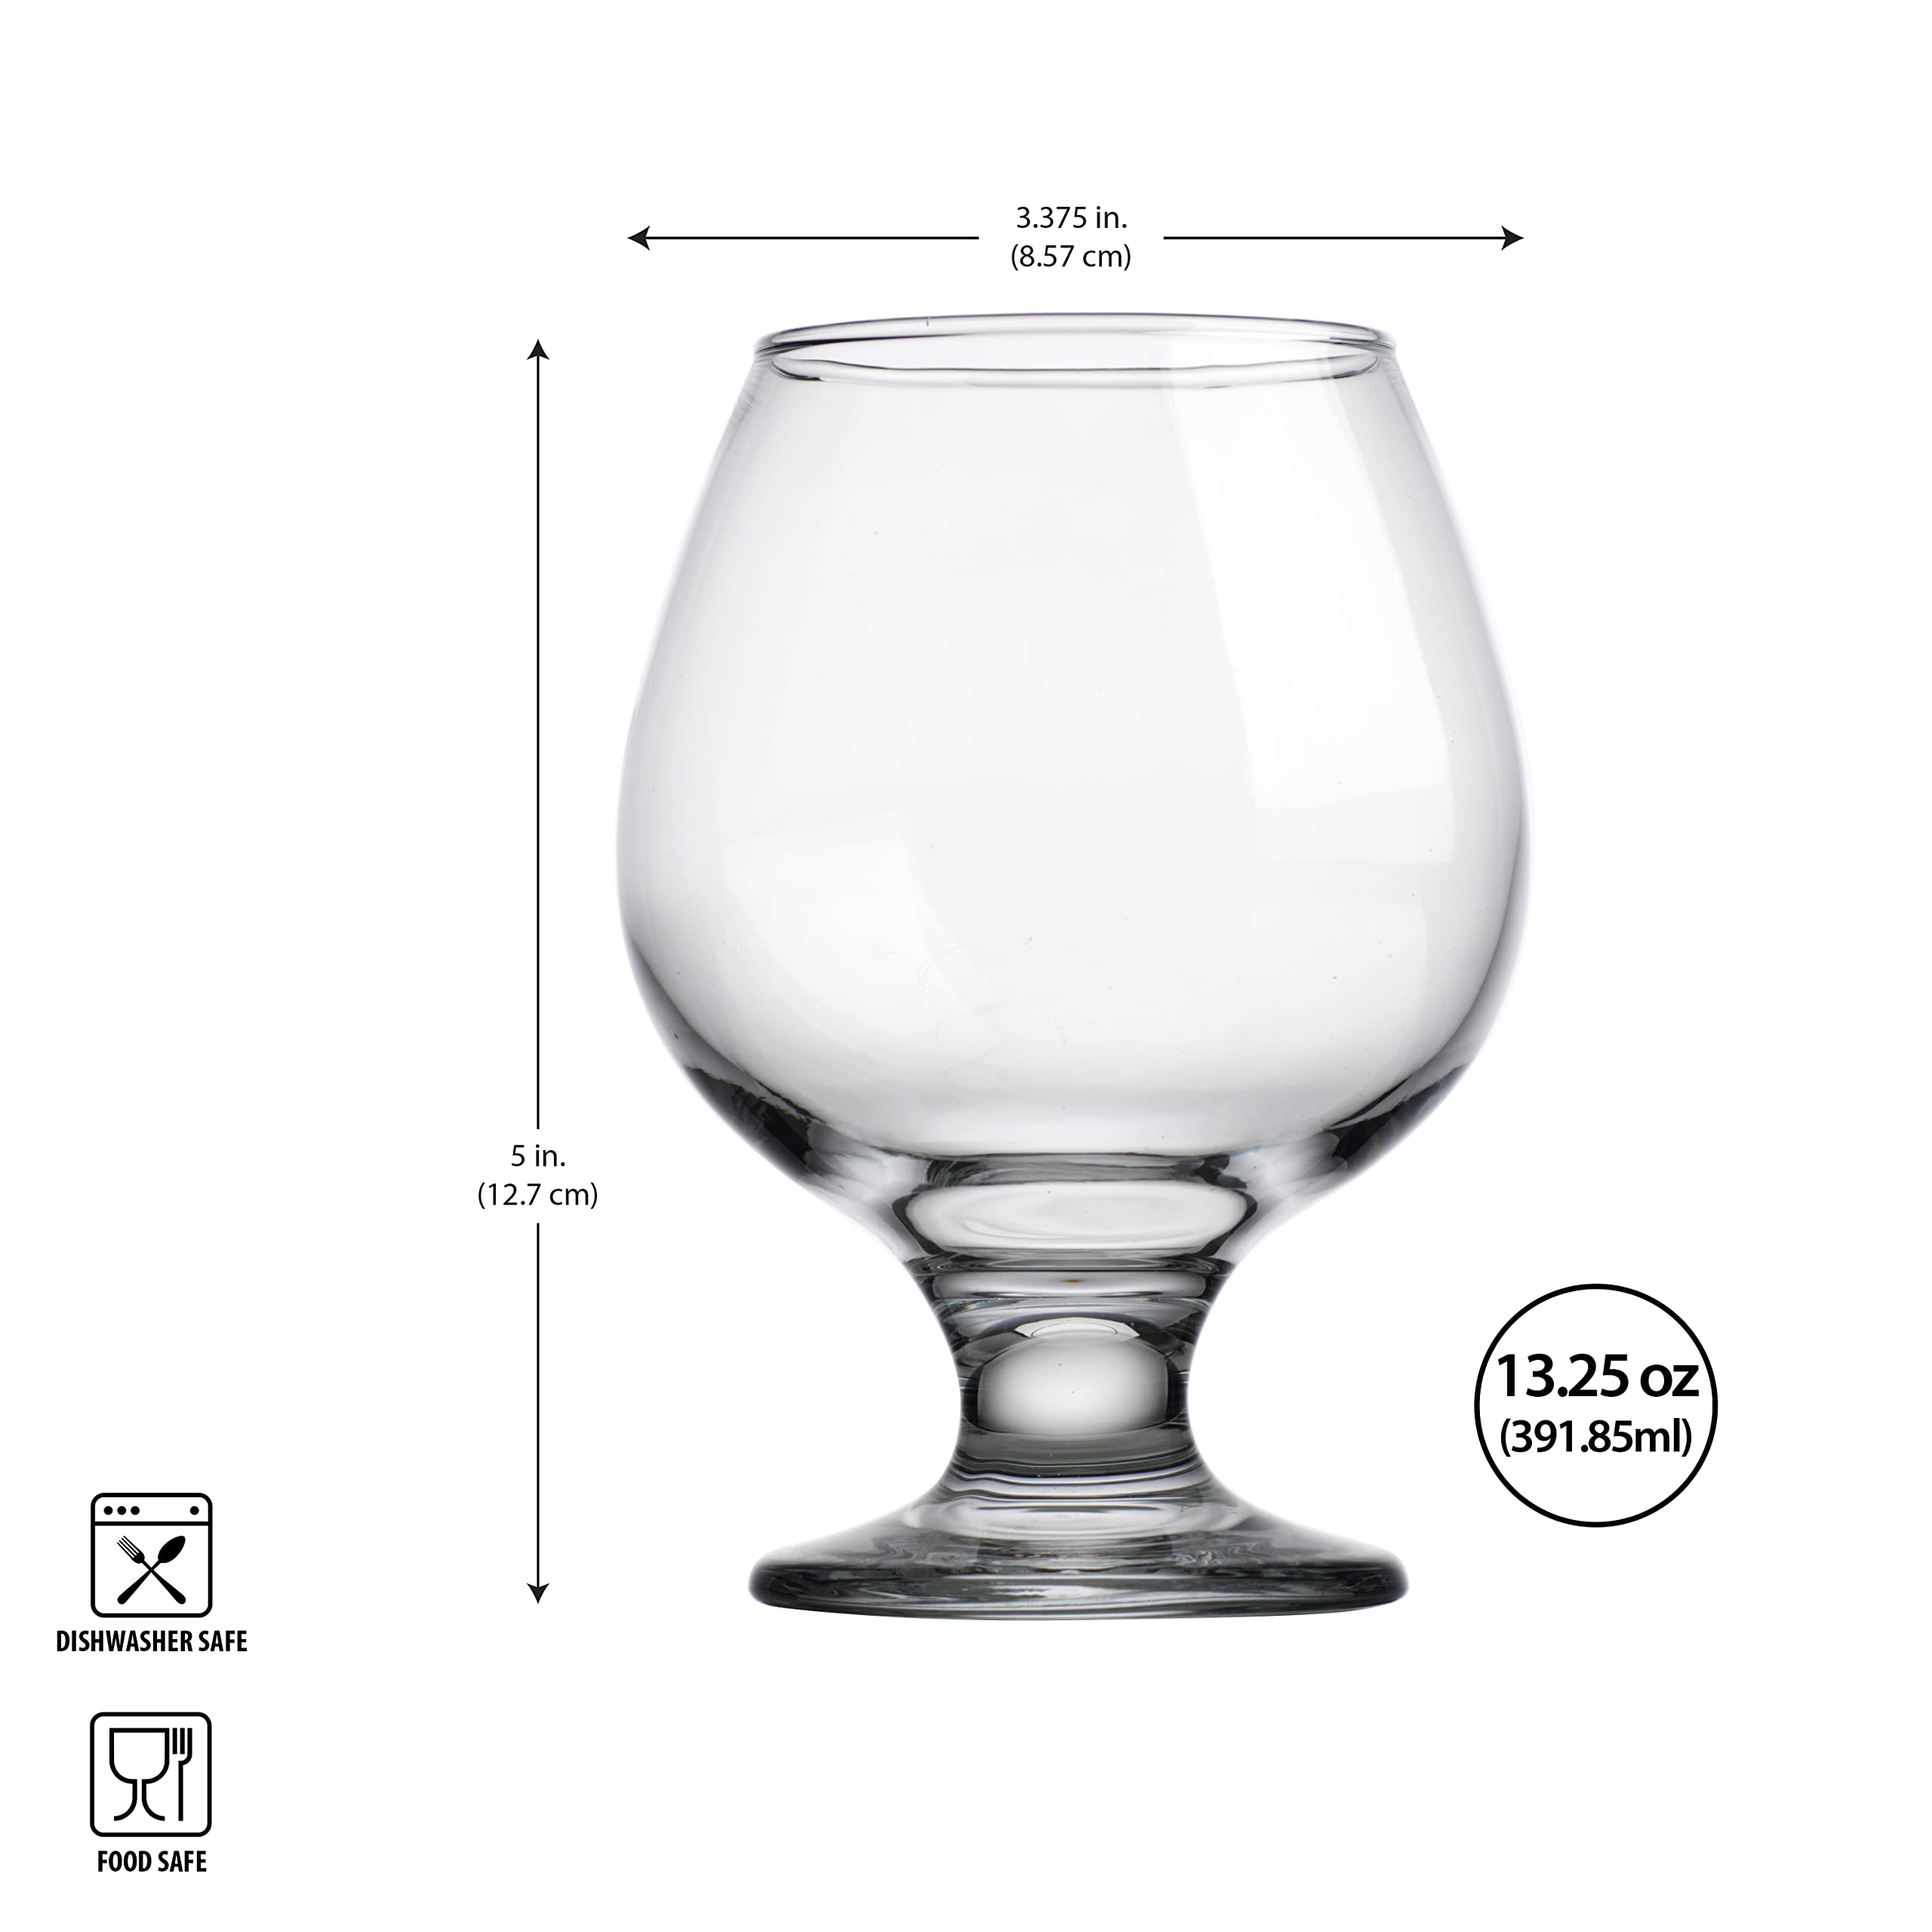 Glaver's Cognac Stemmed Glasses, Set Of 4 13.25 Snifter Glass Set, Classic Whisky Glasses Perfect size for Scotch, Bourbon, Spirits, Beer Tasting, Cognac, Snifter Glasses  - Like New